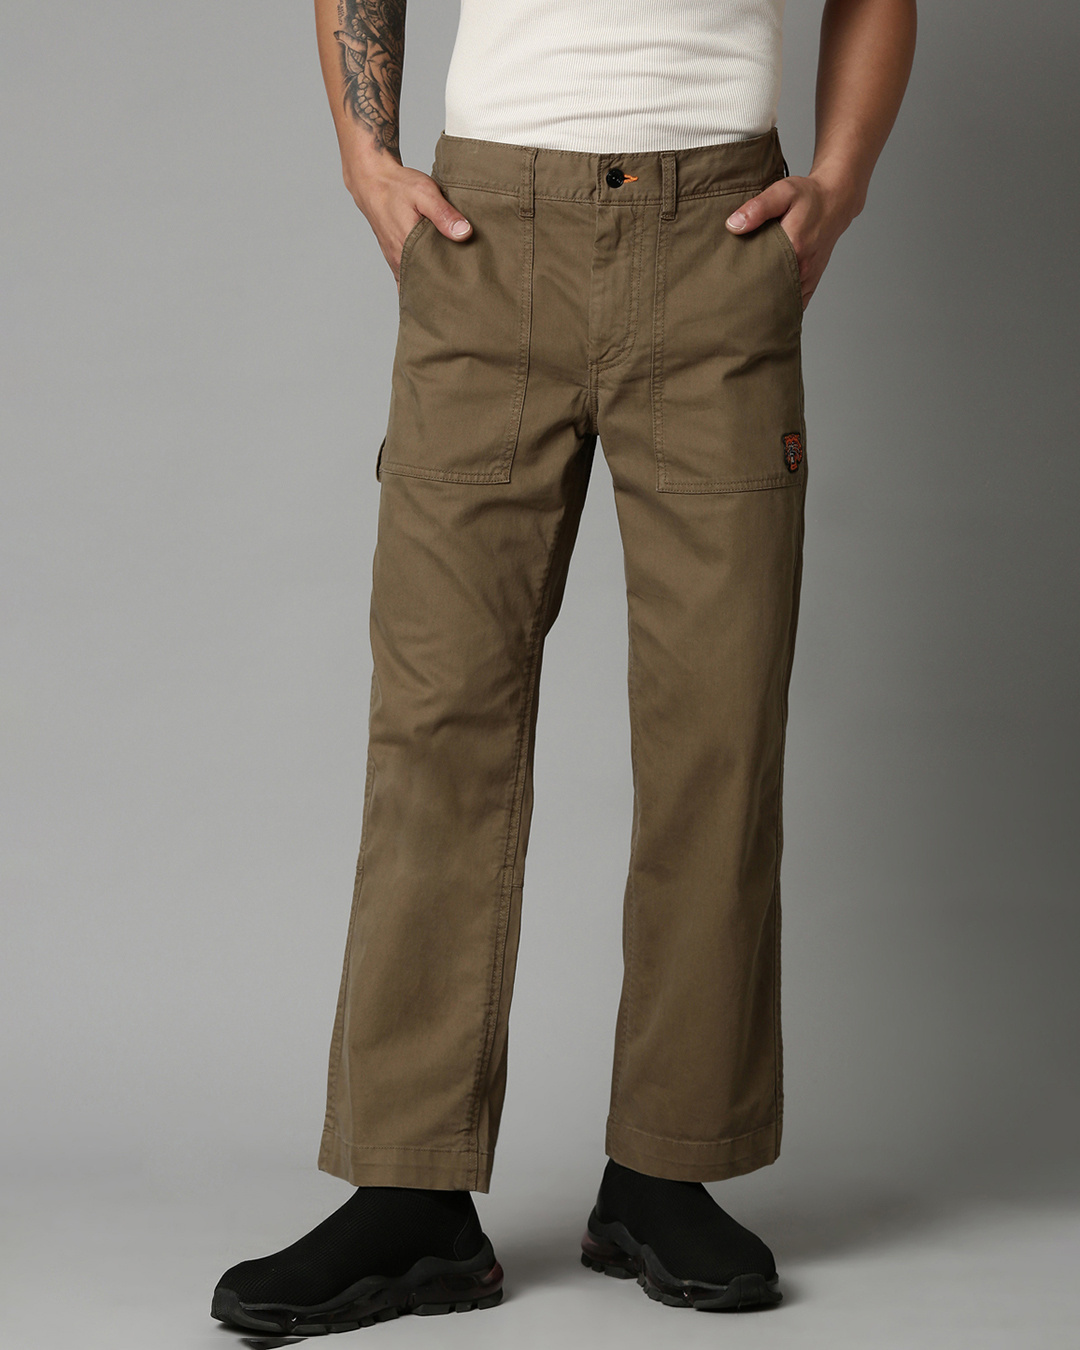 Brahma Men's Workwear Carpenter Pant - Walmart.com